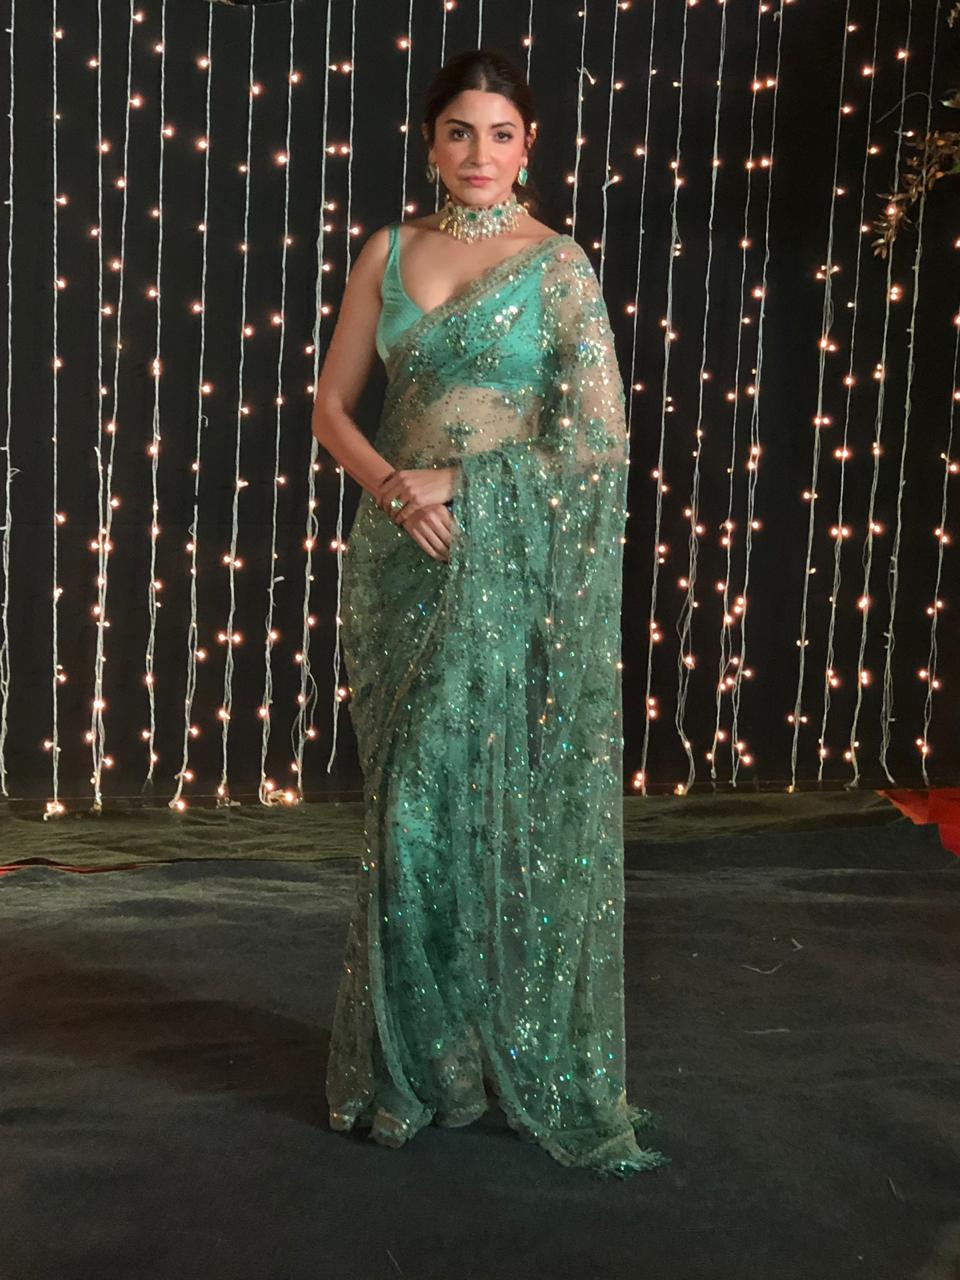 Anushka Sharma Looks Wow in a Stunning Embellished Green Saree!